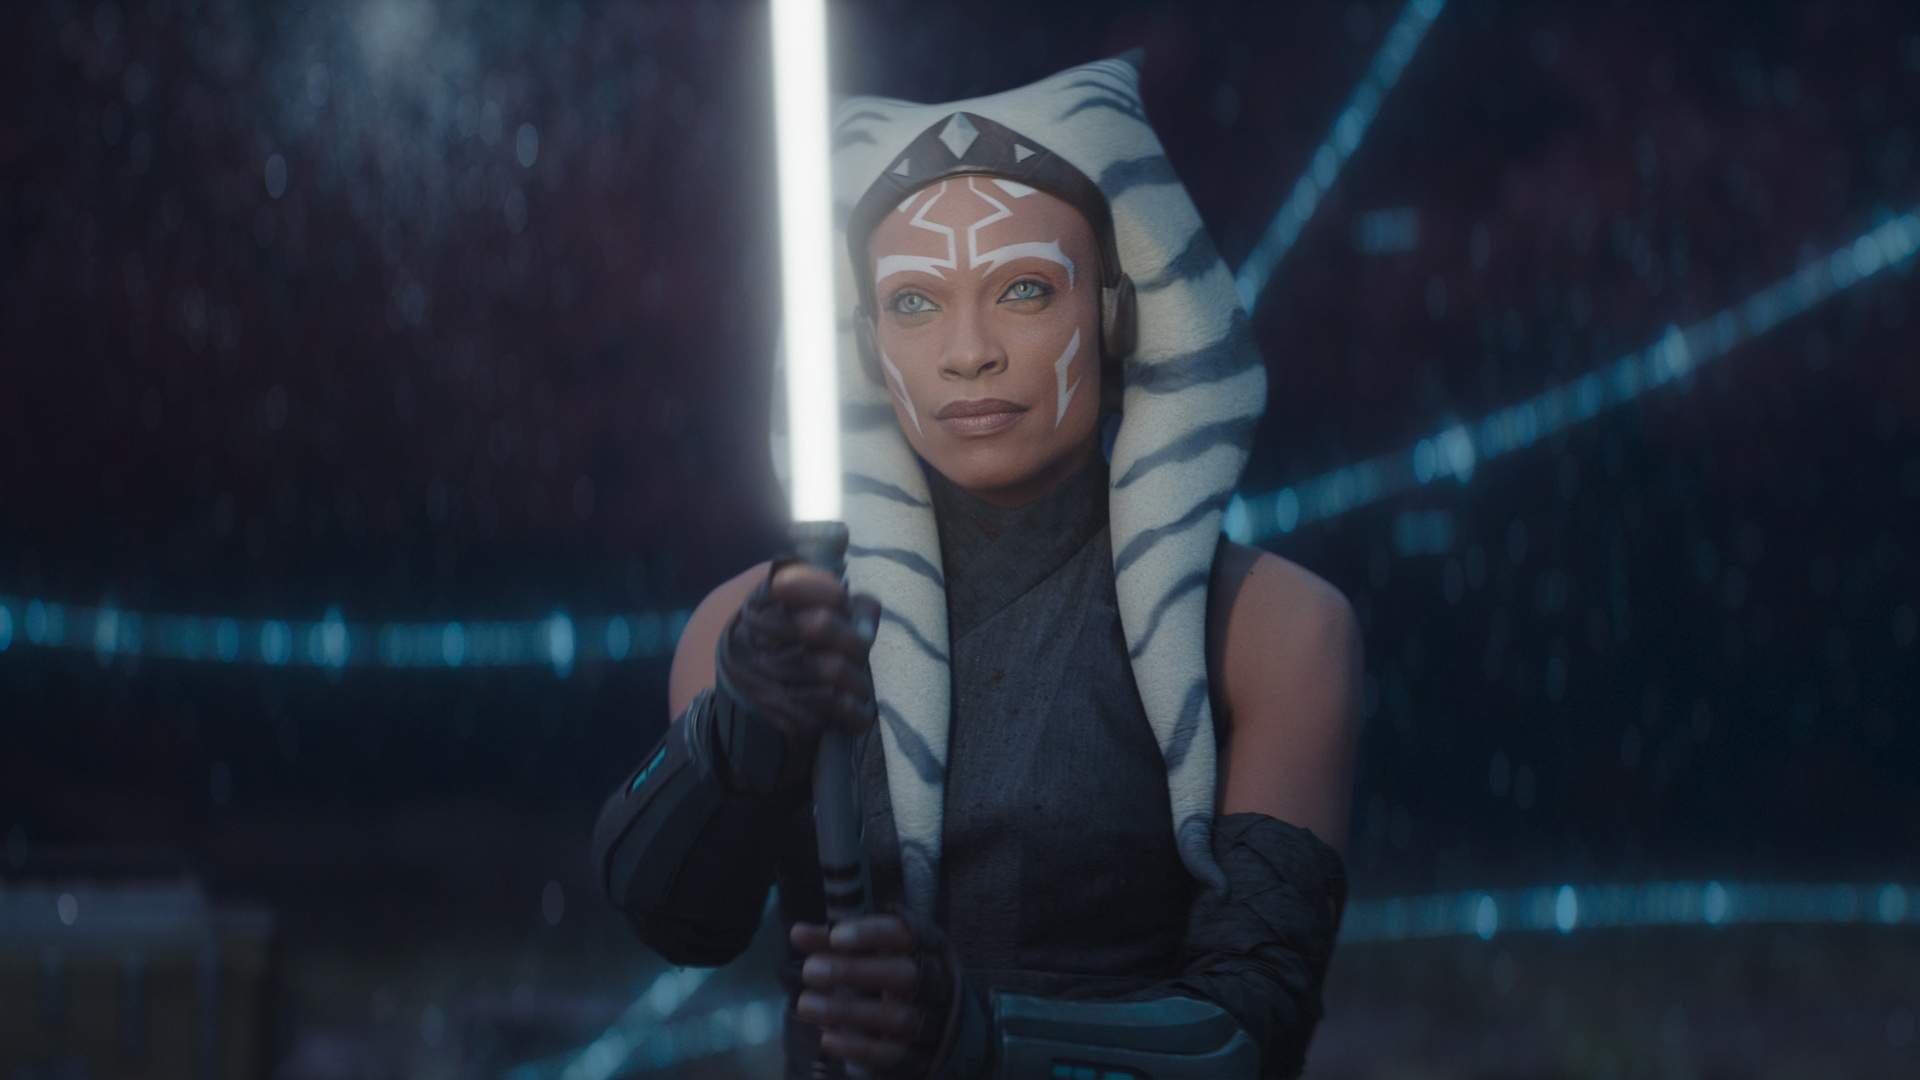 "Once a Rebel, Always a Rebel": The Full Trailer for New 'Star Wars' Series 'Ahsoka' Is Here